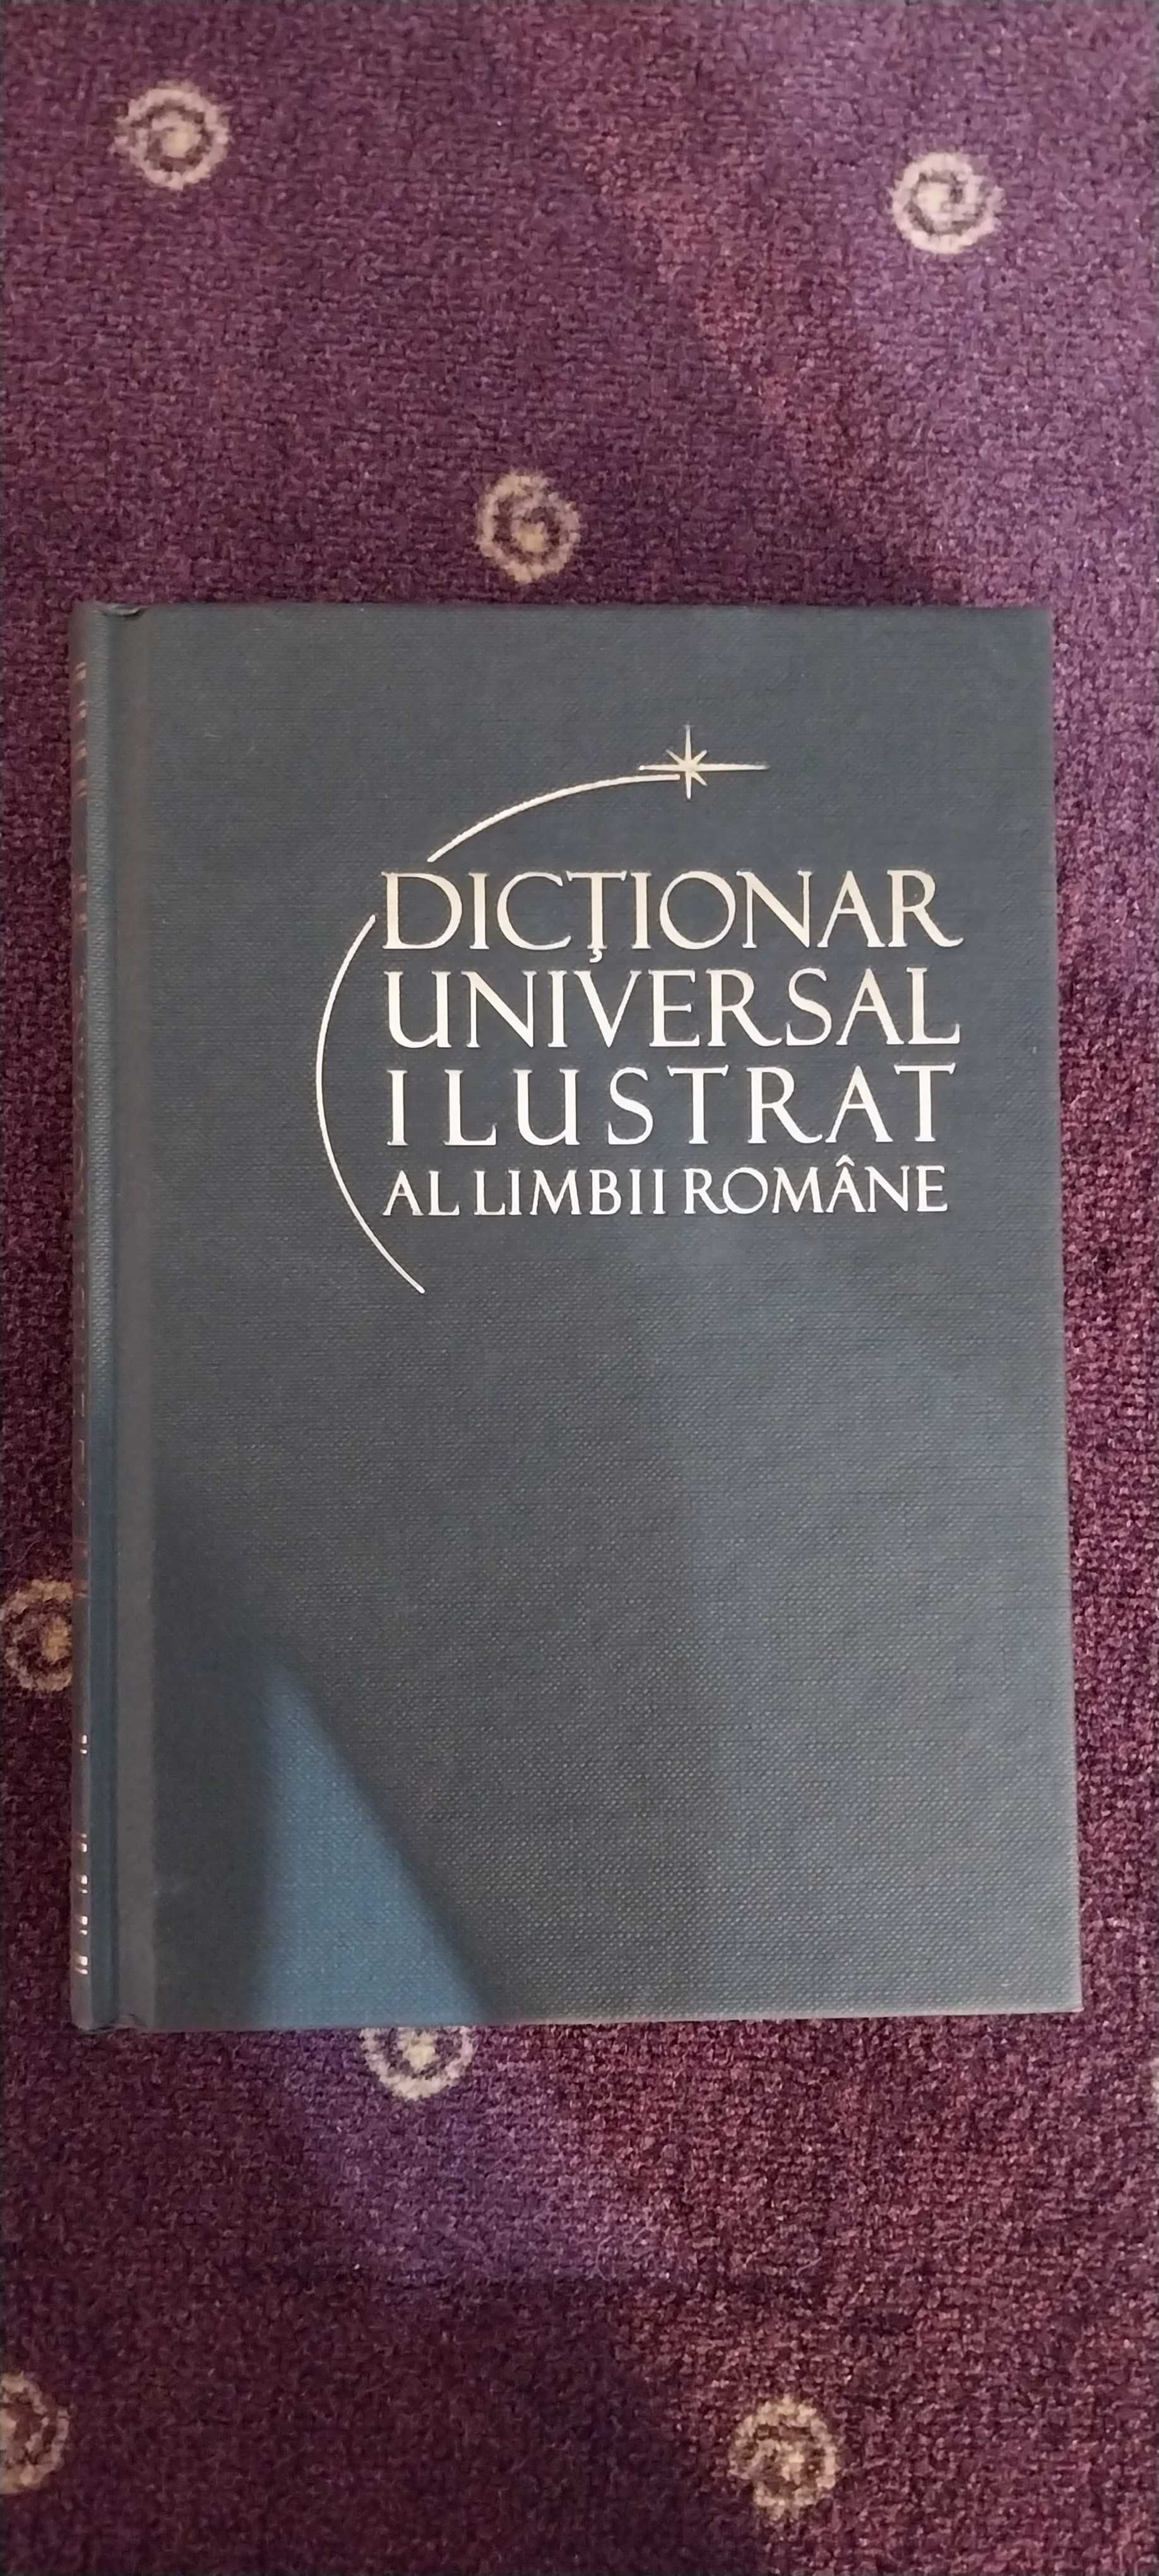 Dictionar universal ilustratat al limbii romane